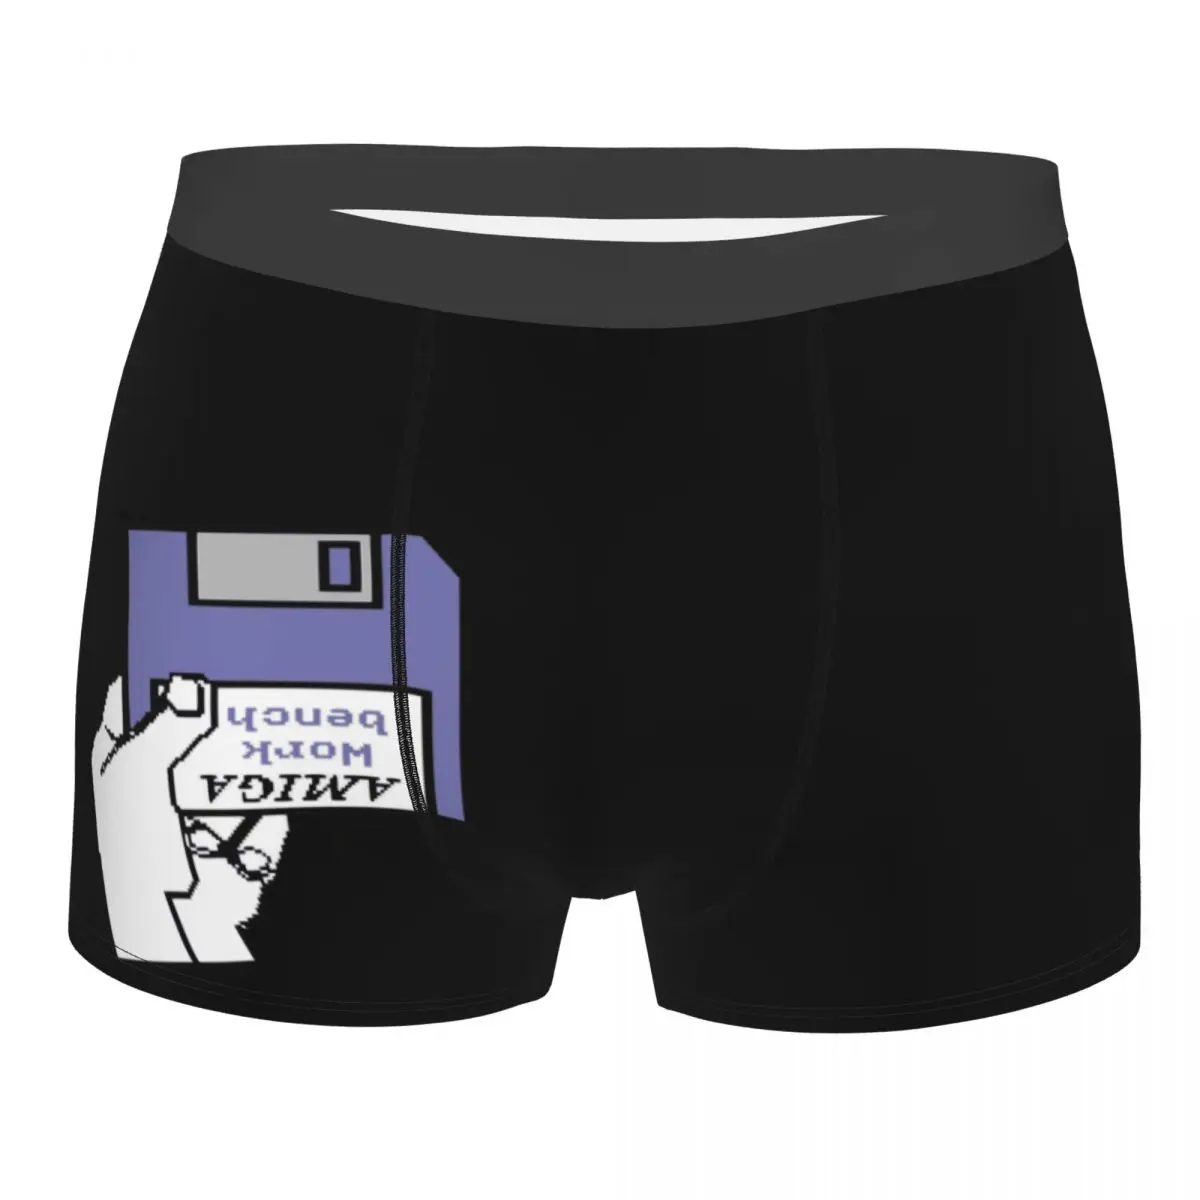 

Men Boxer Briefs Shorts Panties Amiga 500 Polyester Underwear Commodore C64 Game Atari Workbench Cult Retro Male Underpants